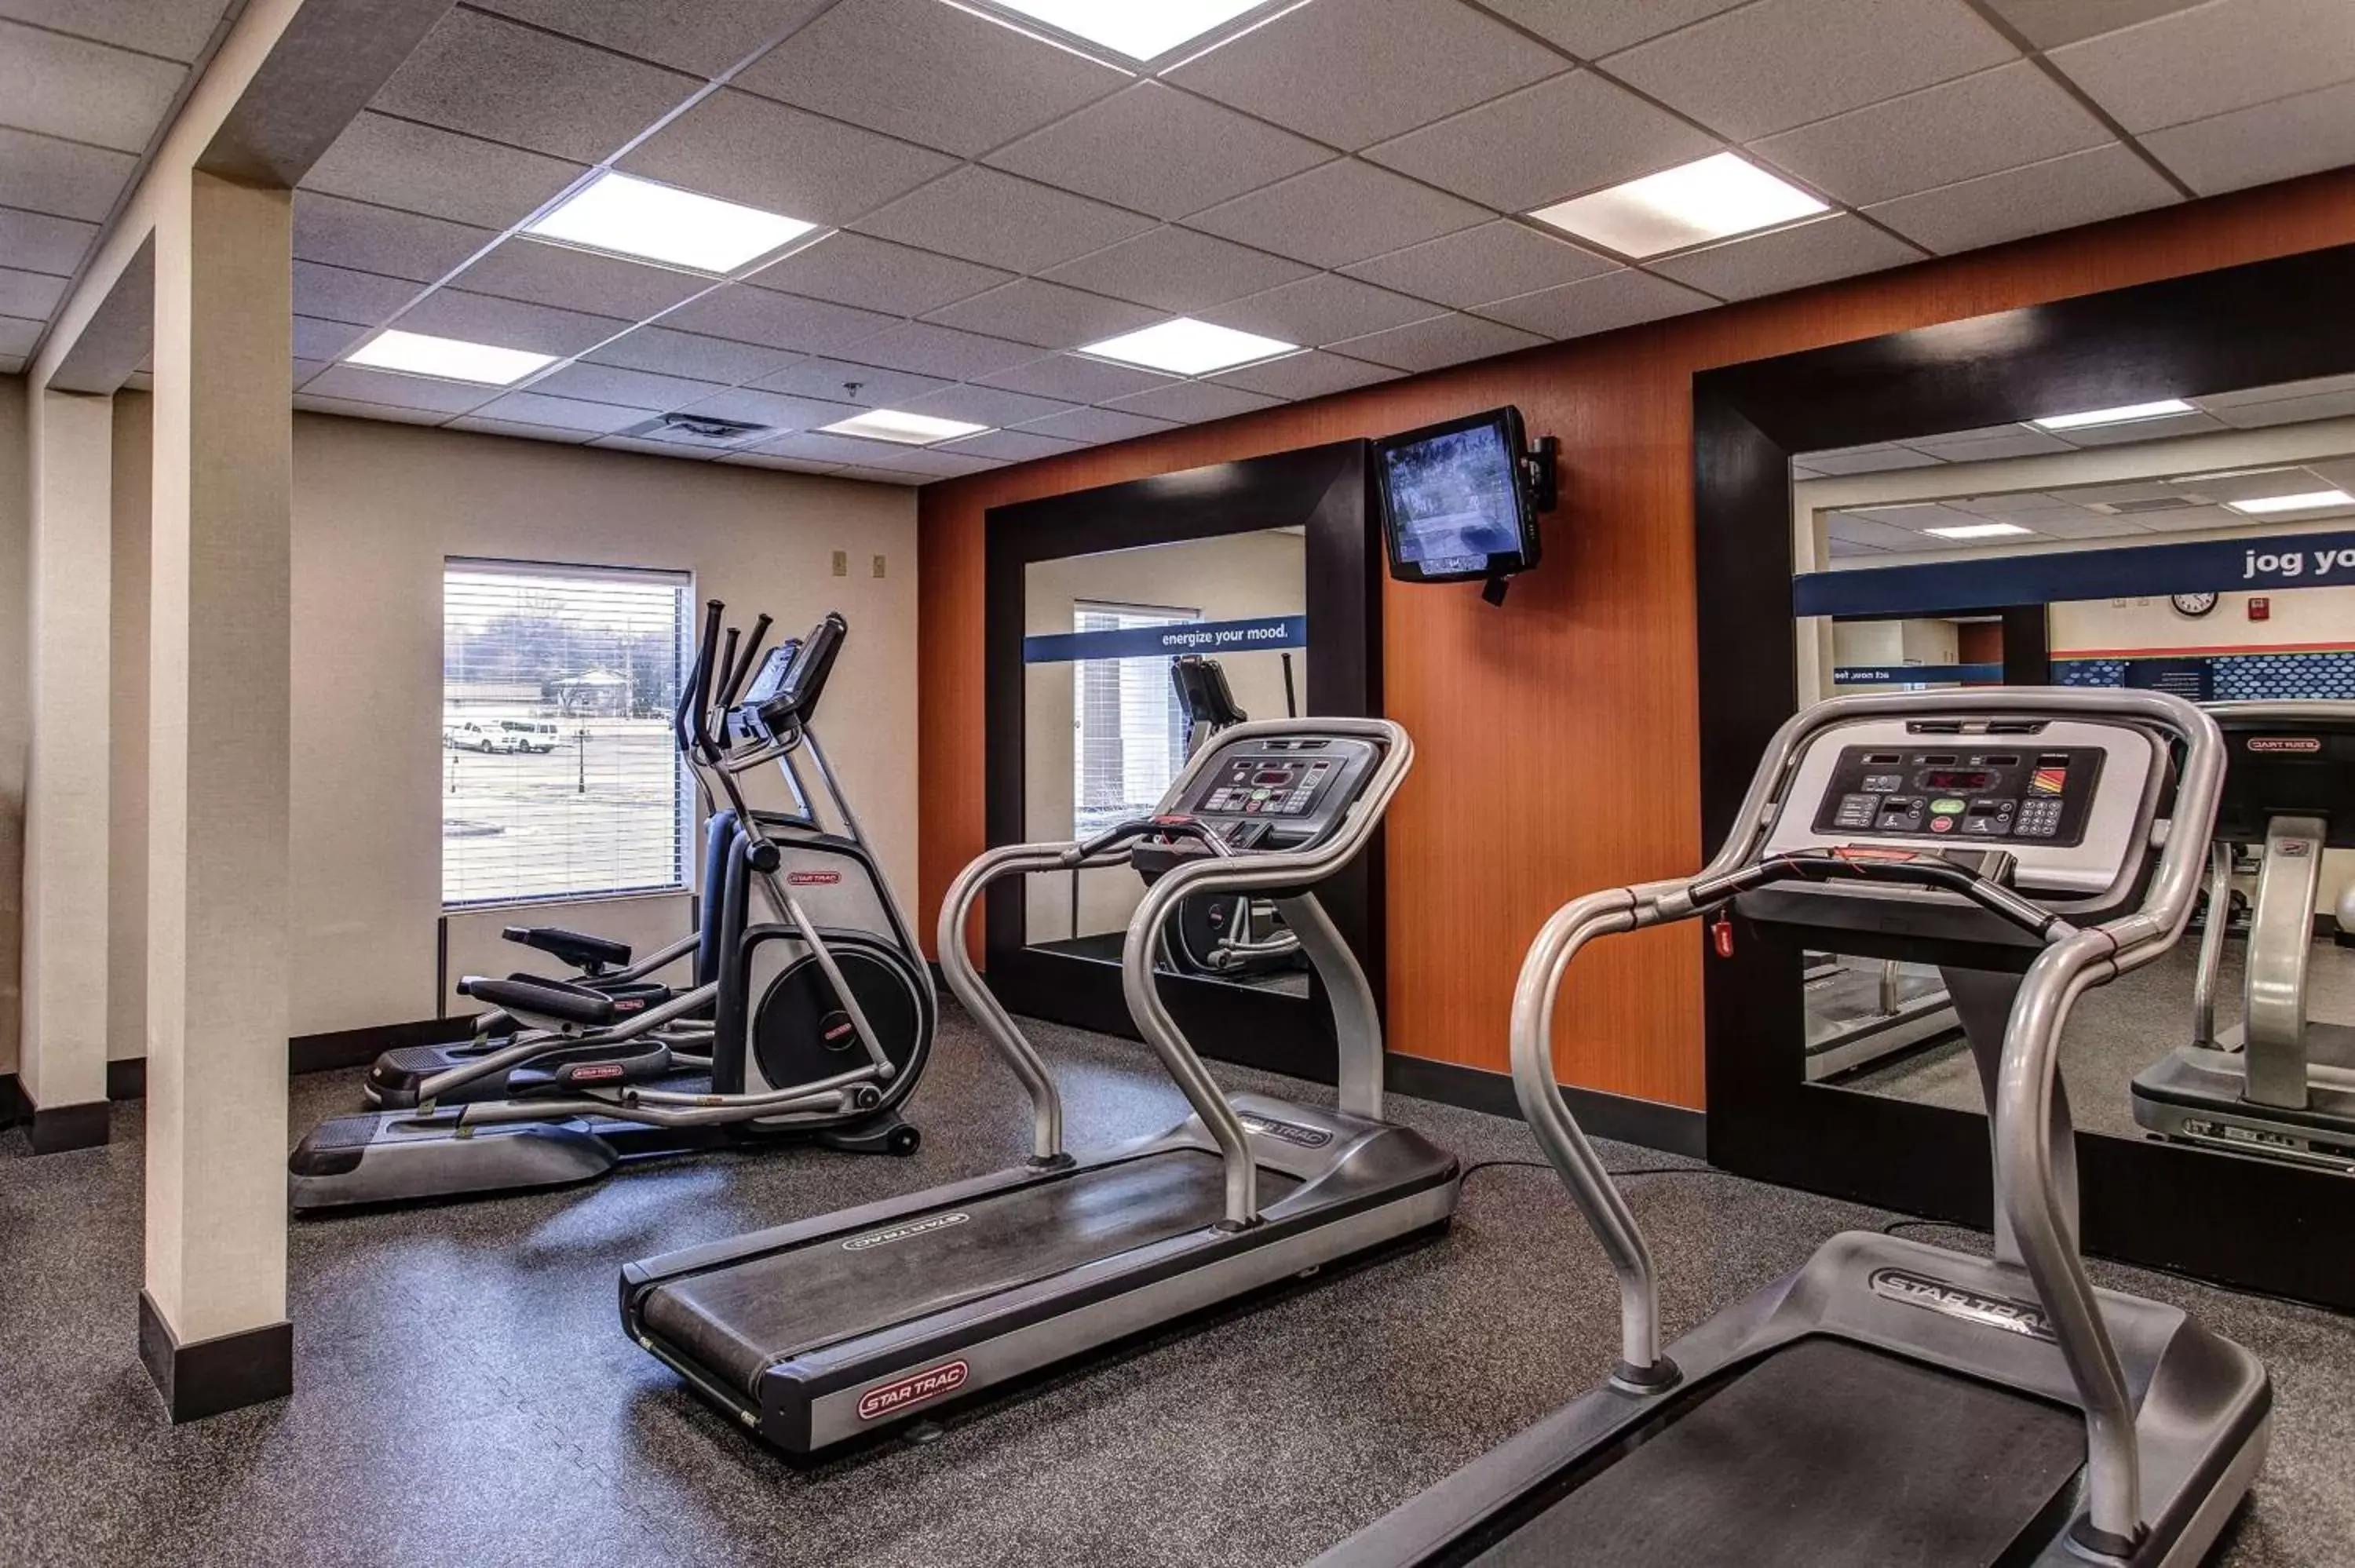 Fitness centre/facilities, Fitness Center/Facilities in Hampton Inn Junction City